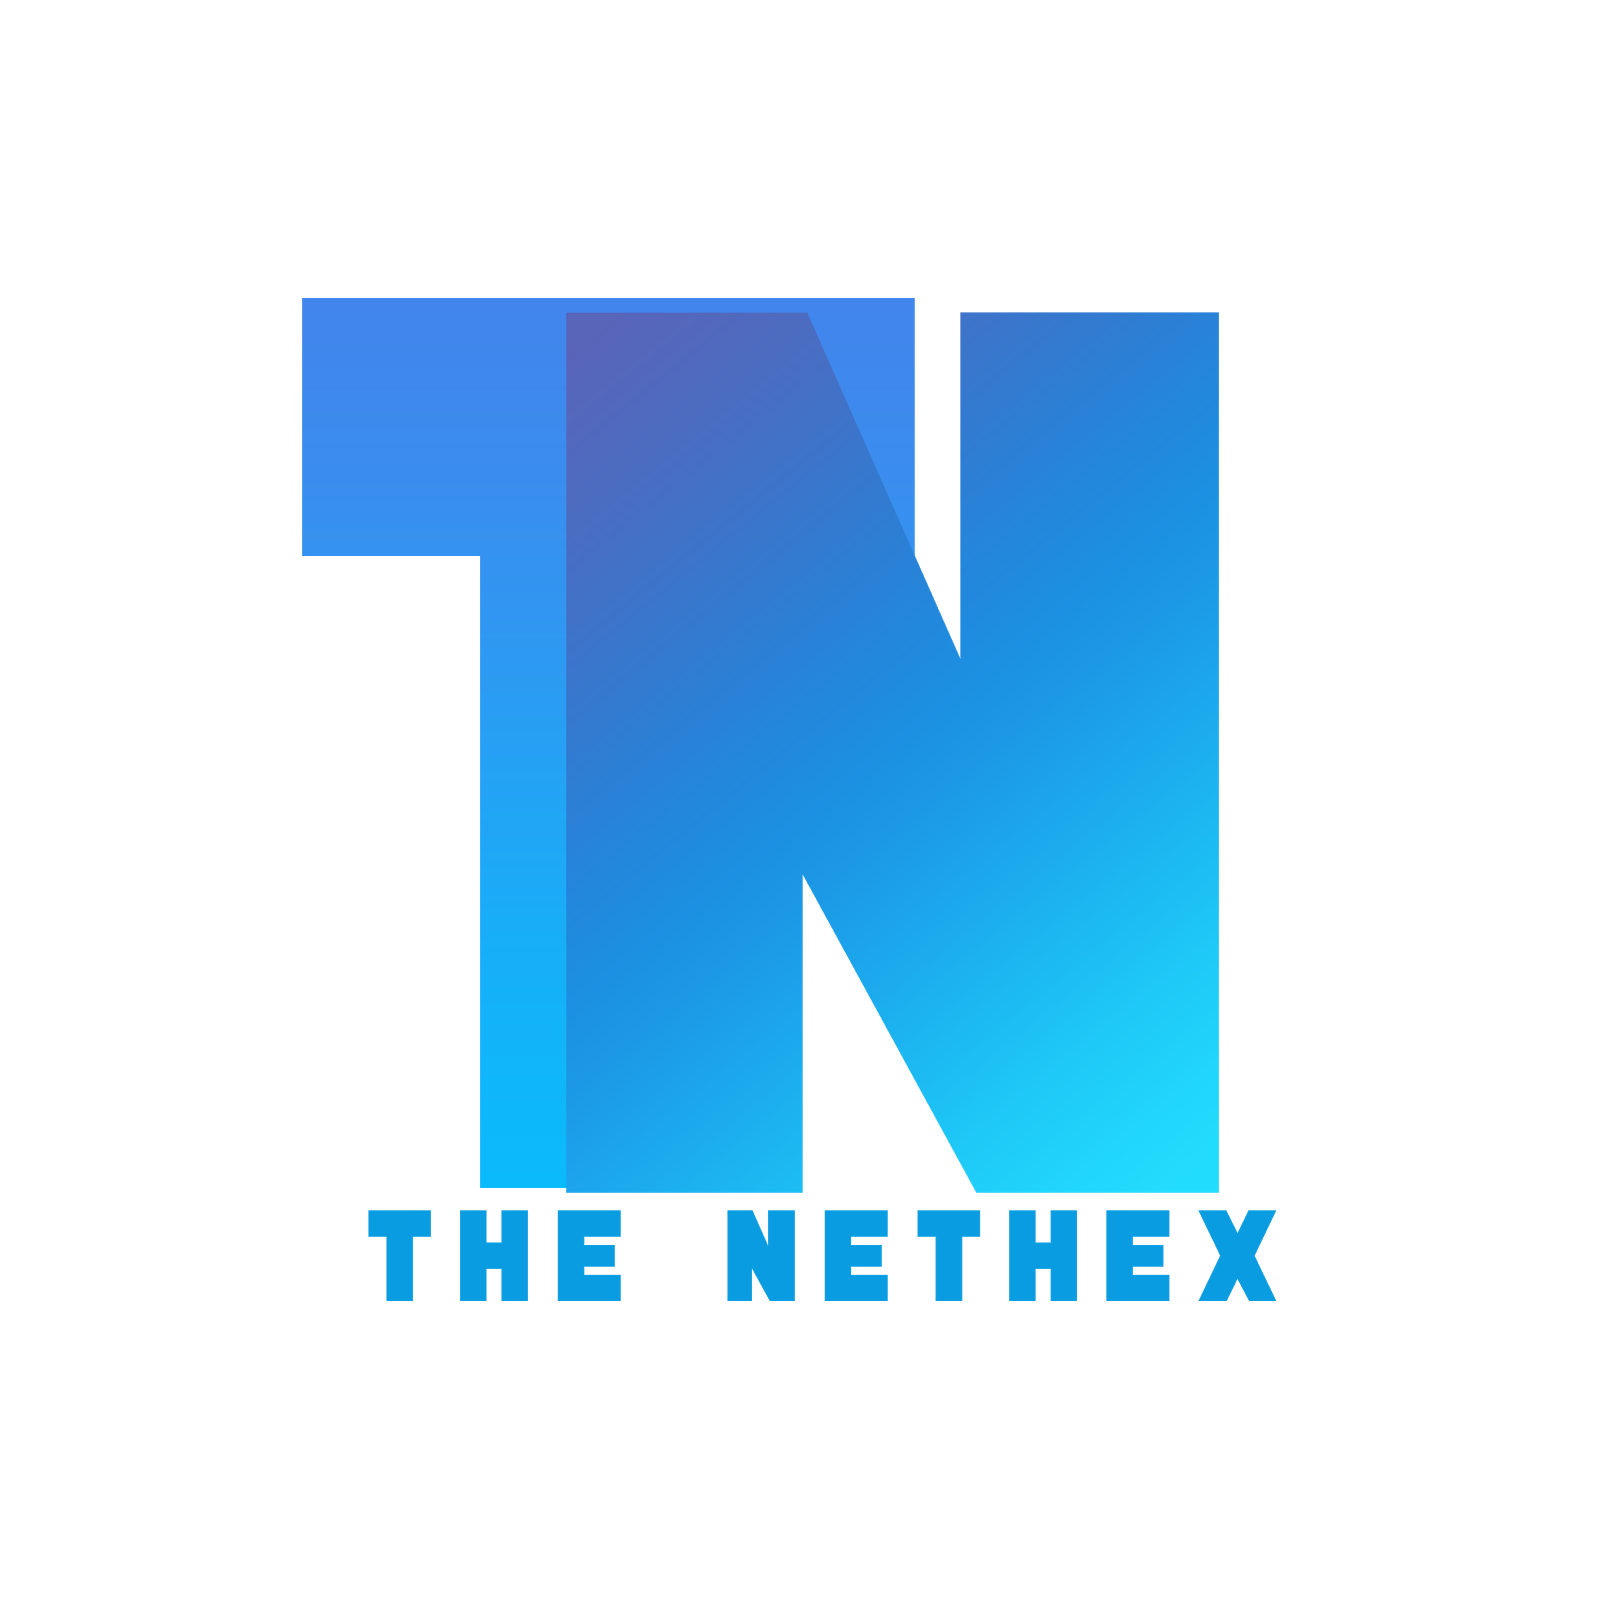 THE NETHEX